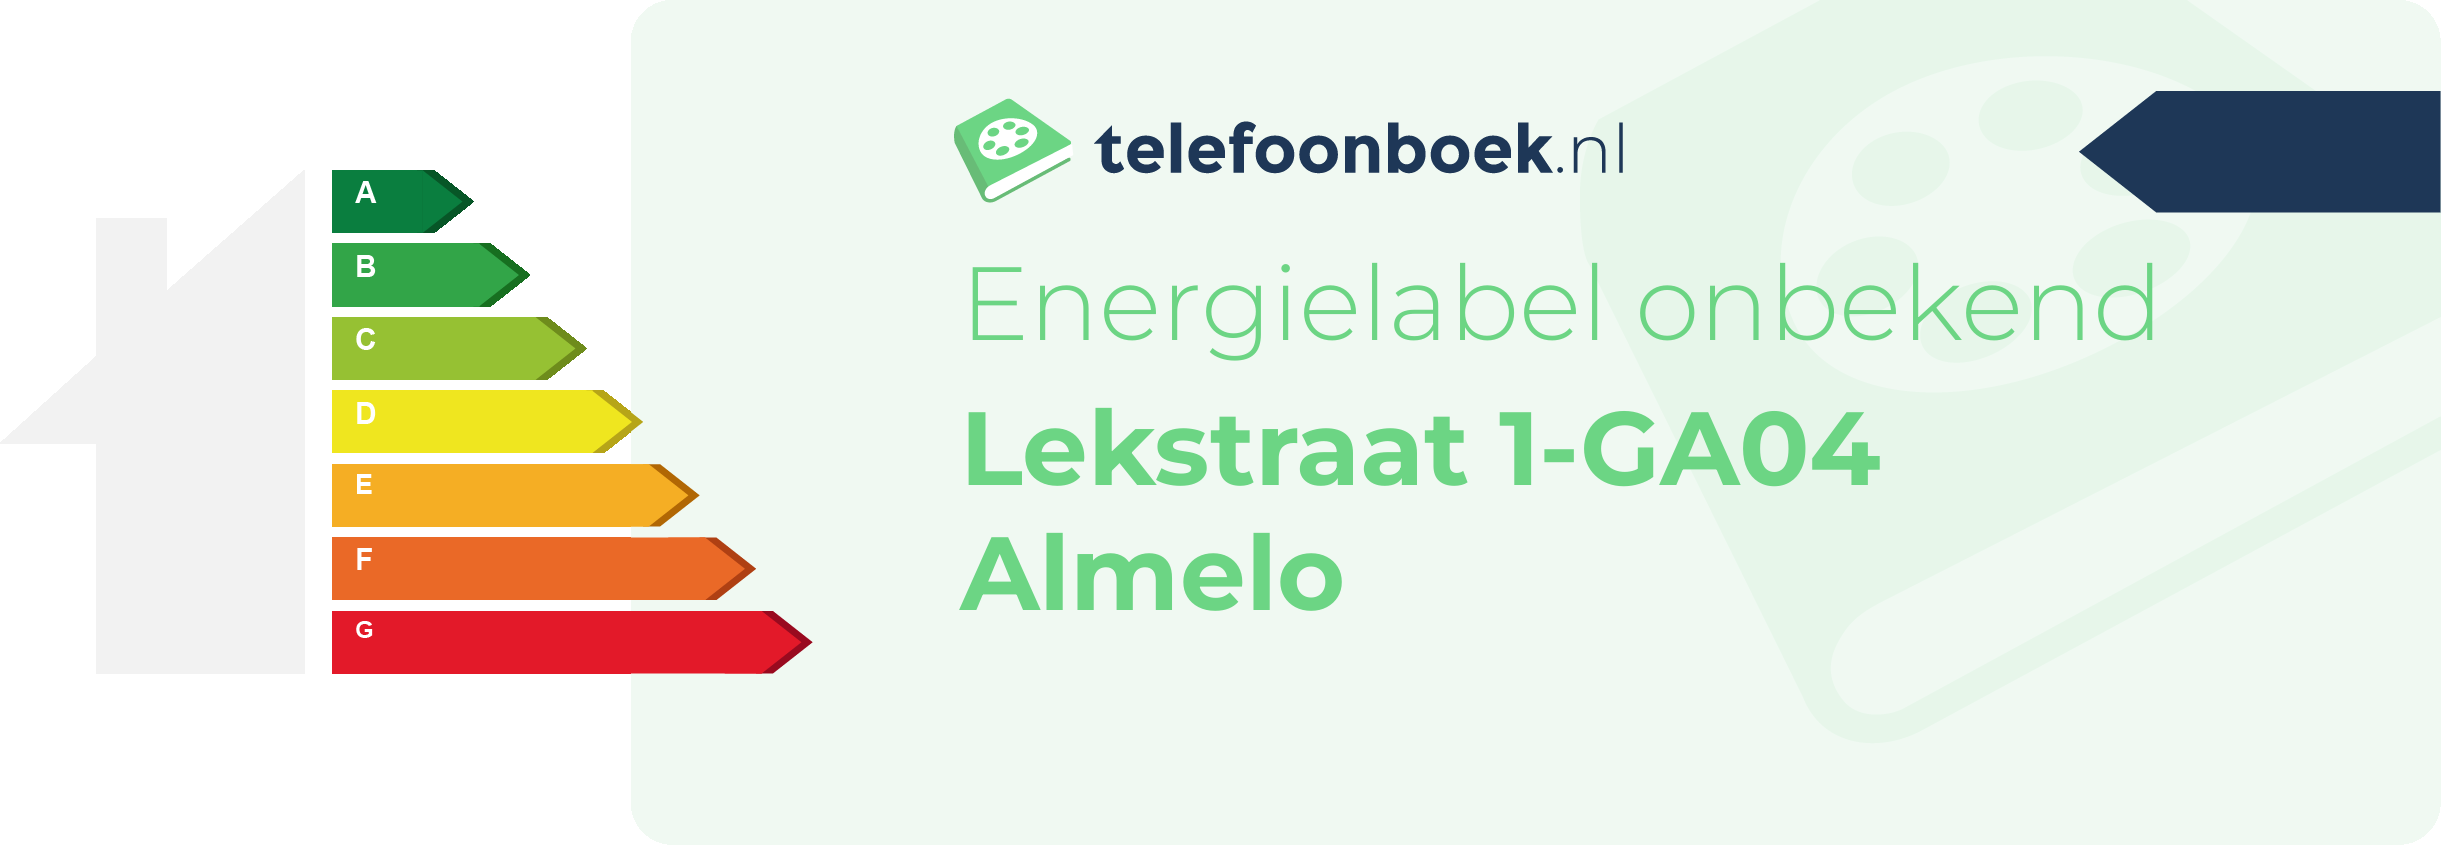 Energielabel Lekstraat 1-GA04 Almelo